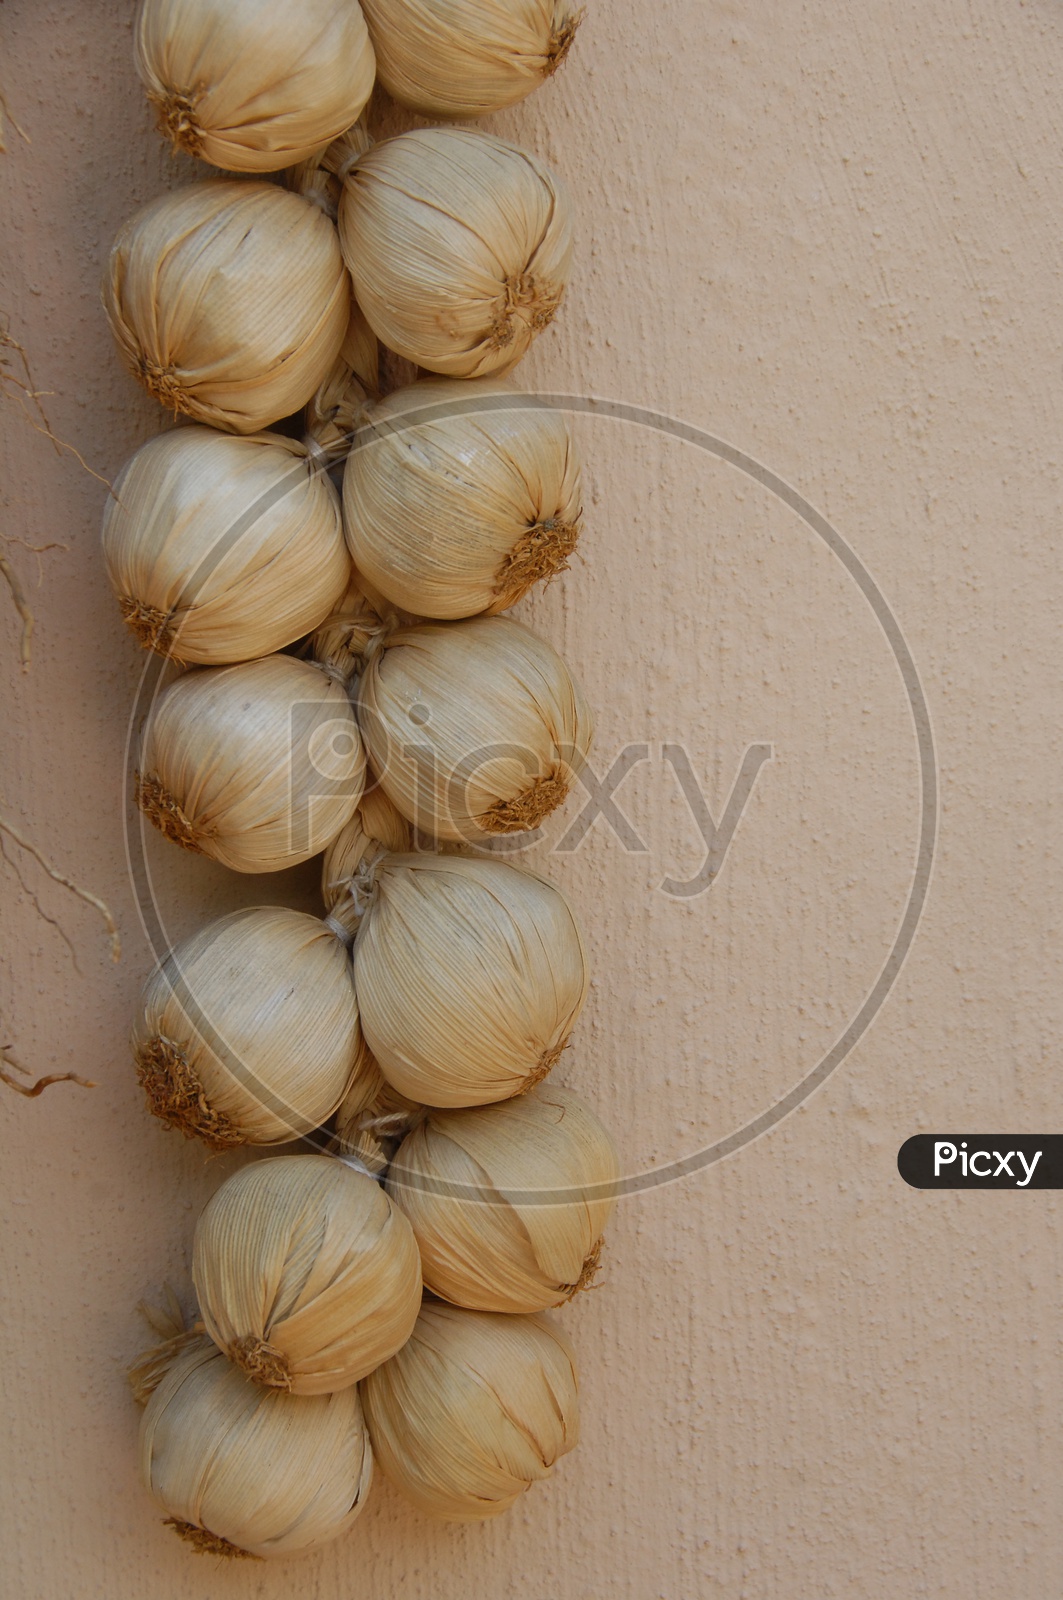 Garlic braids against a light textured wall background